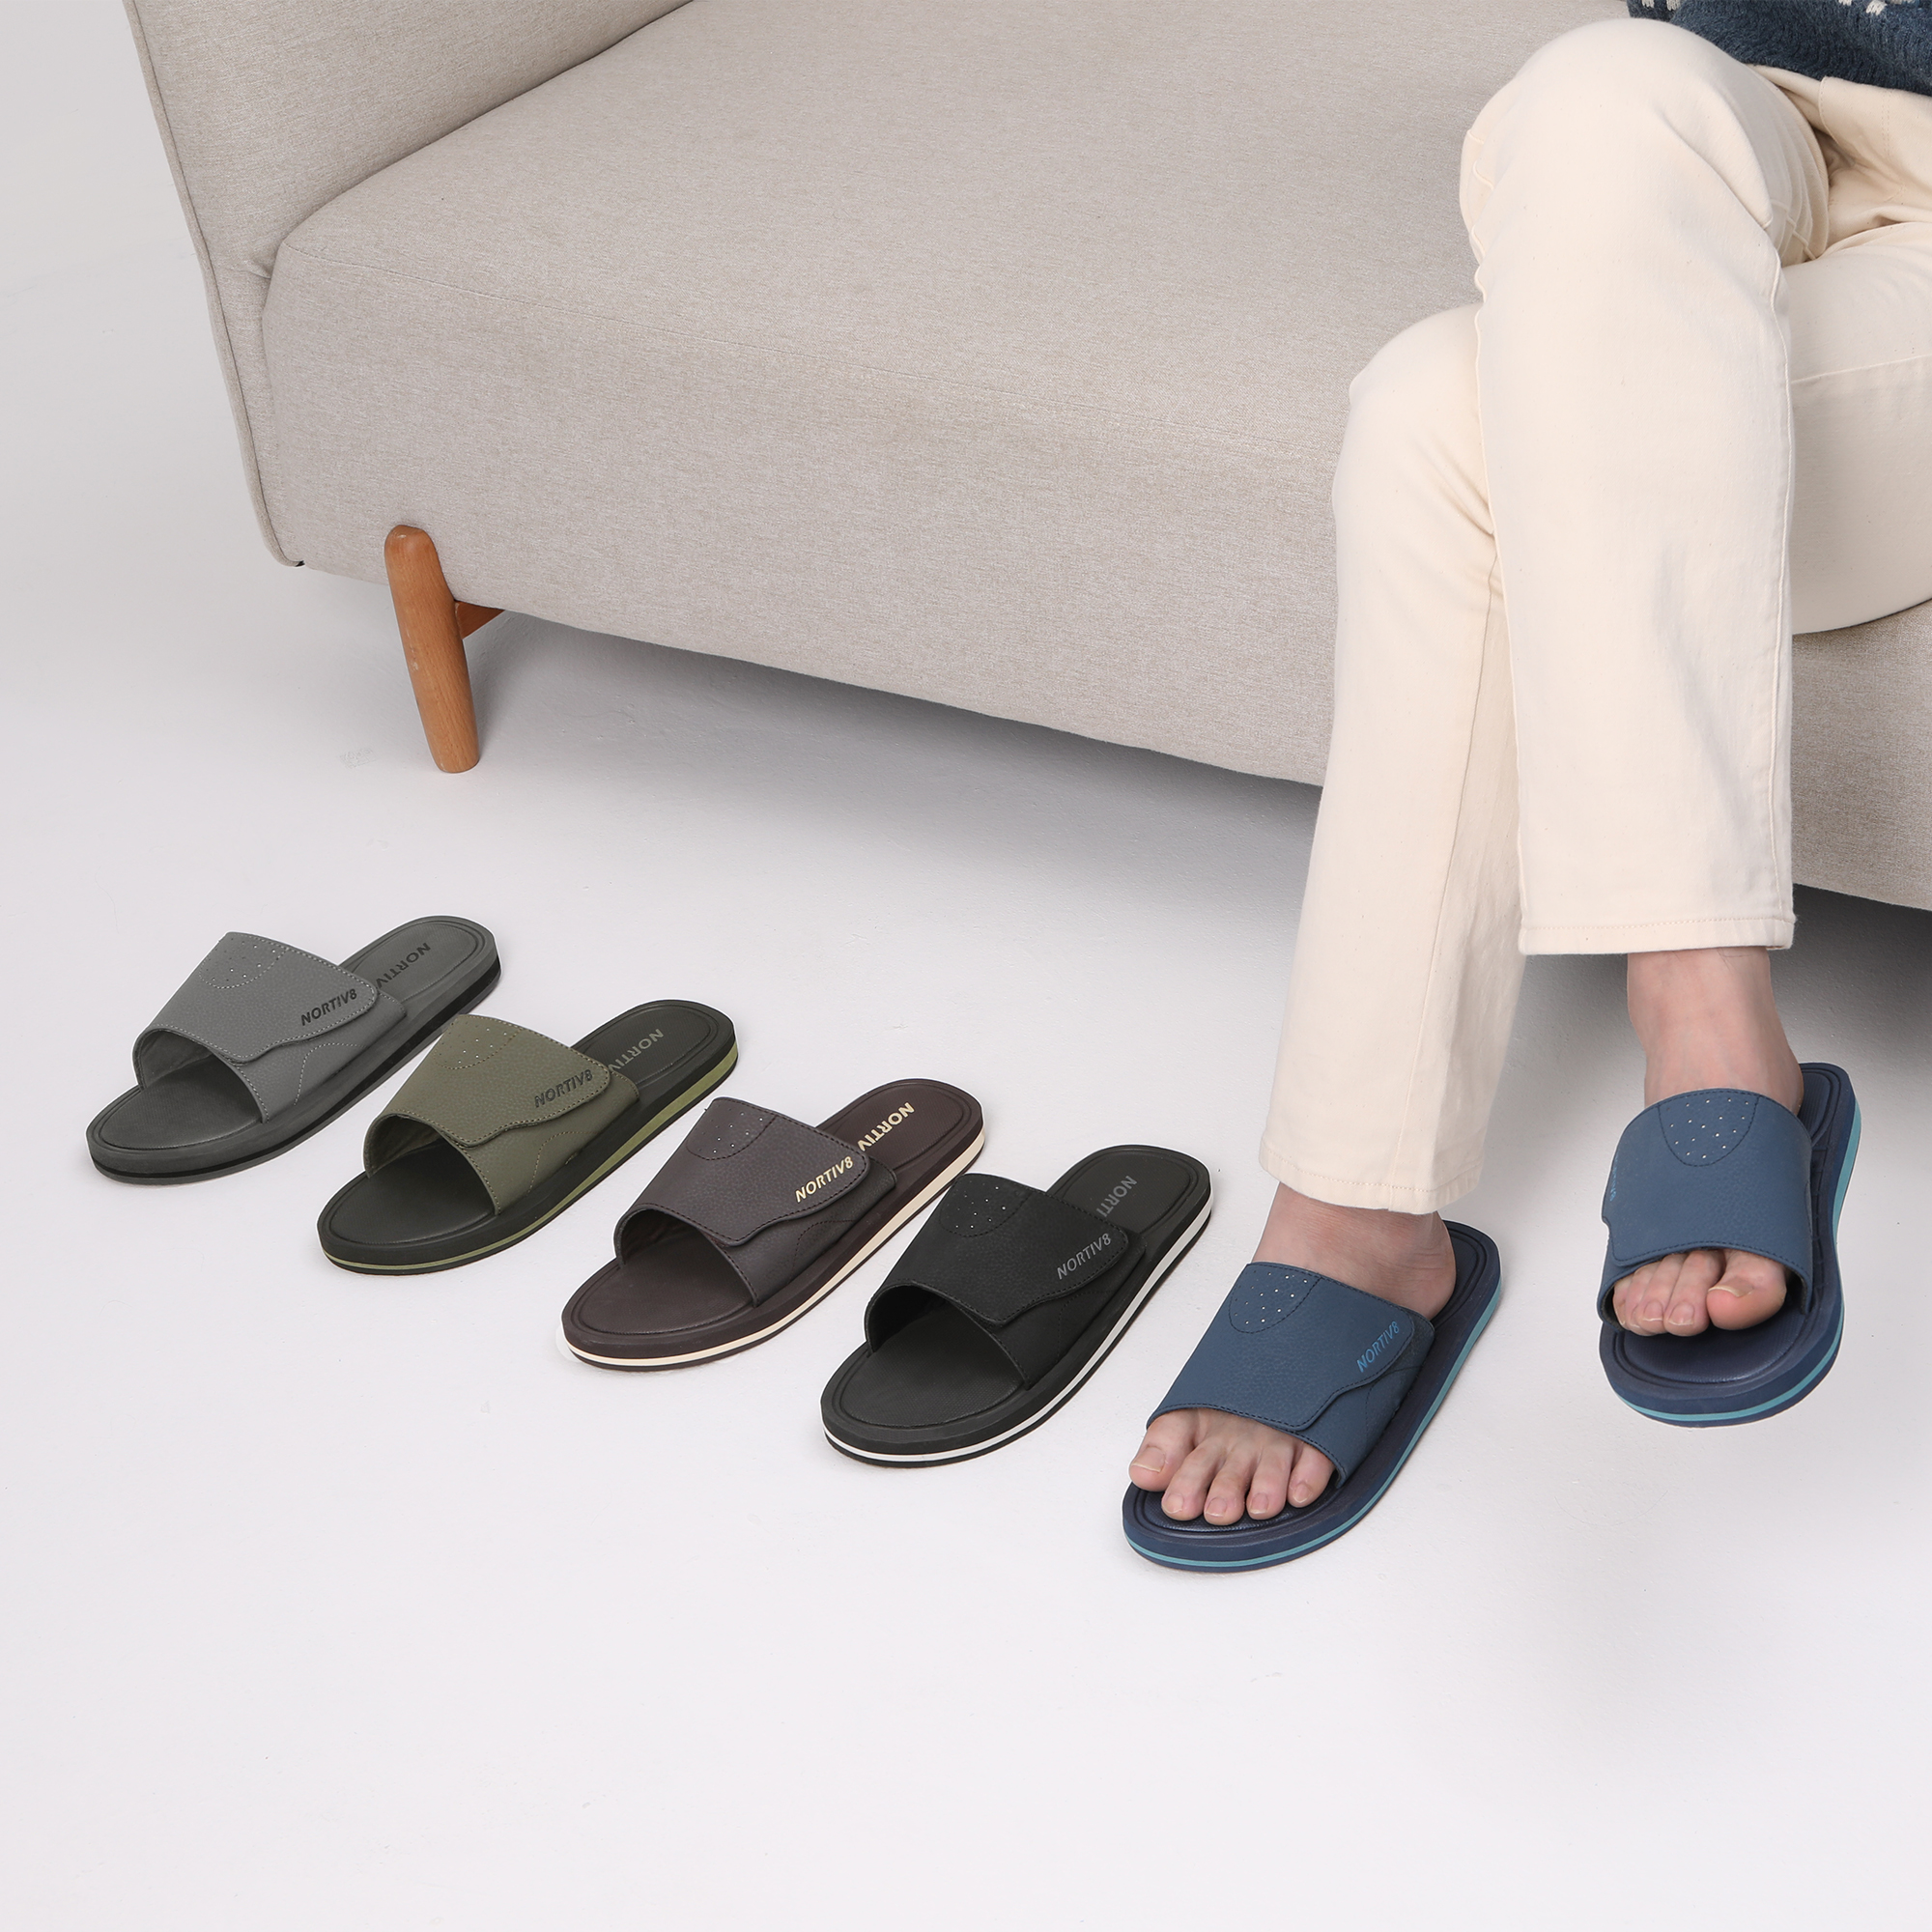 Nortiv8 Men's Memory Foam Adjustable Slide Sandals Comfort Lightweight Summer Beach Sandals Shoes FUSION OLIVE/GREEN Size 8 - image 4 of 5